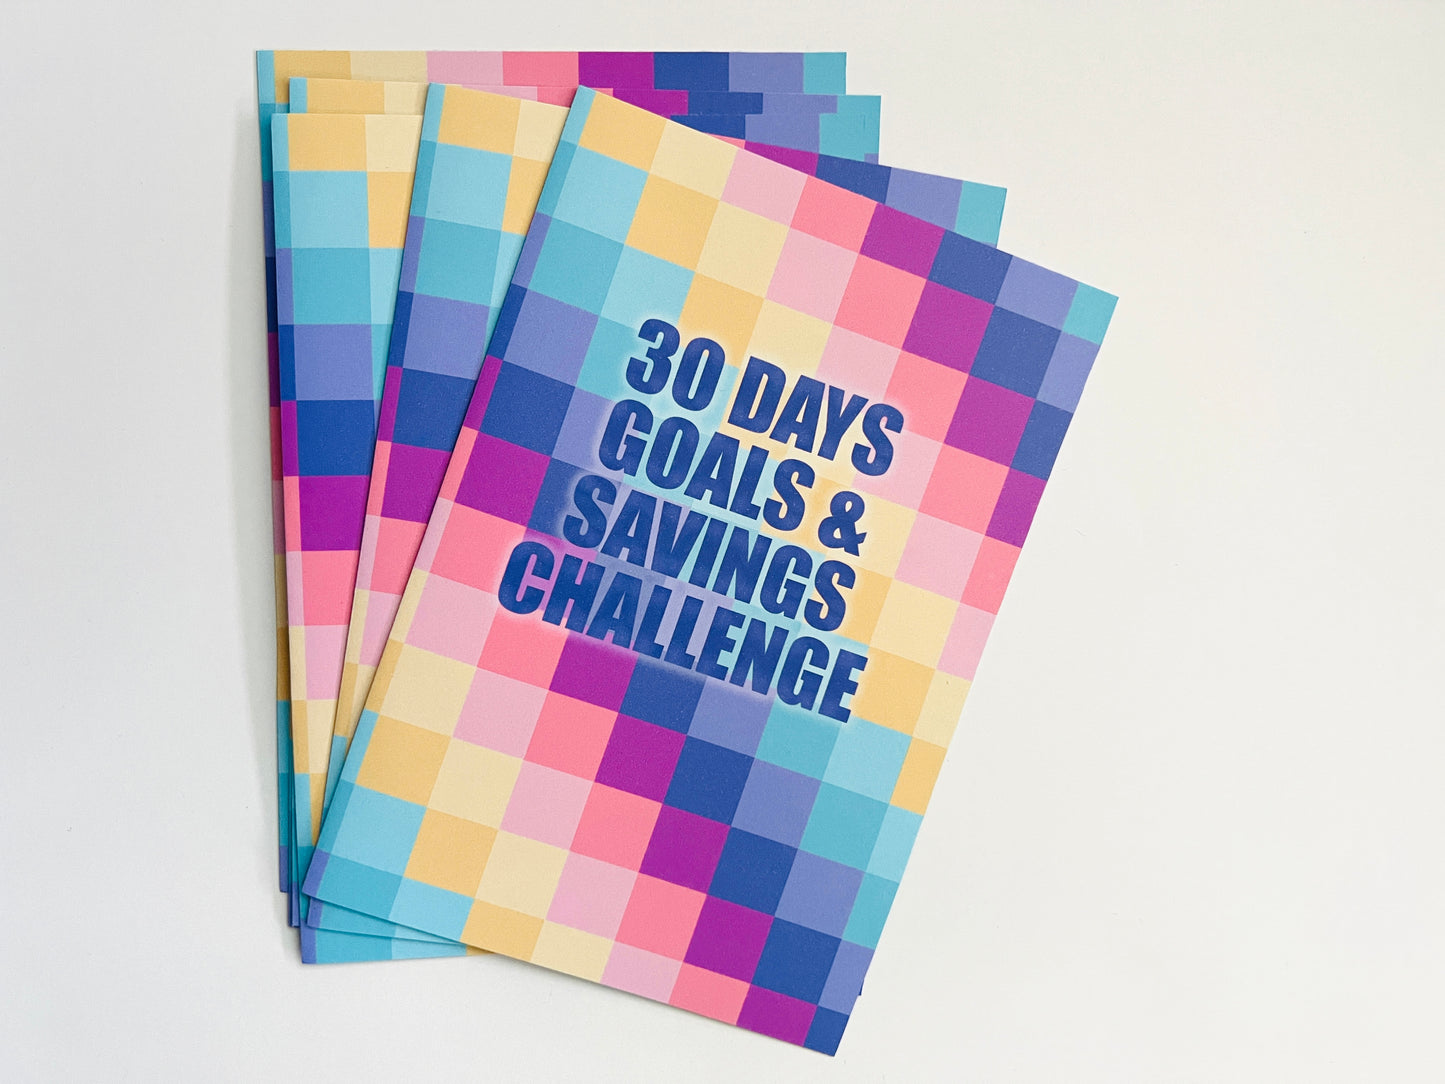 30 DAYS GOALS & SAVINGS CHALLENGE KIT